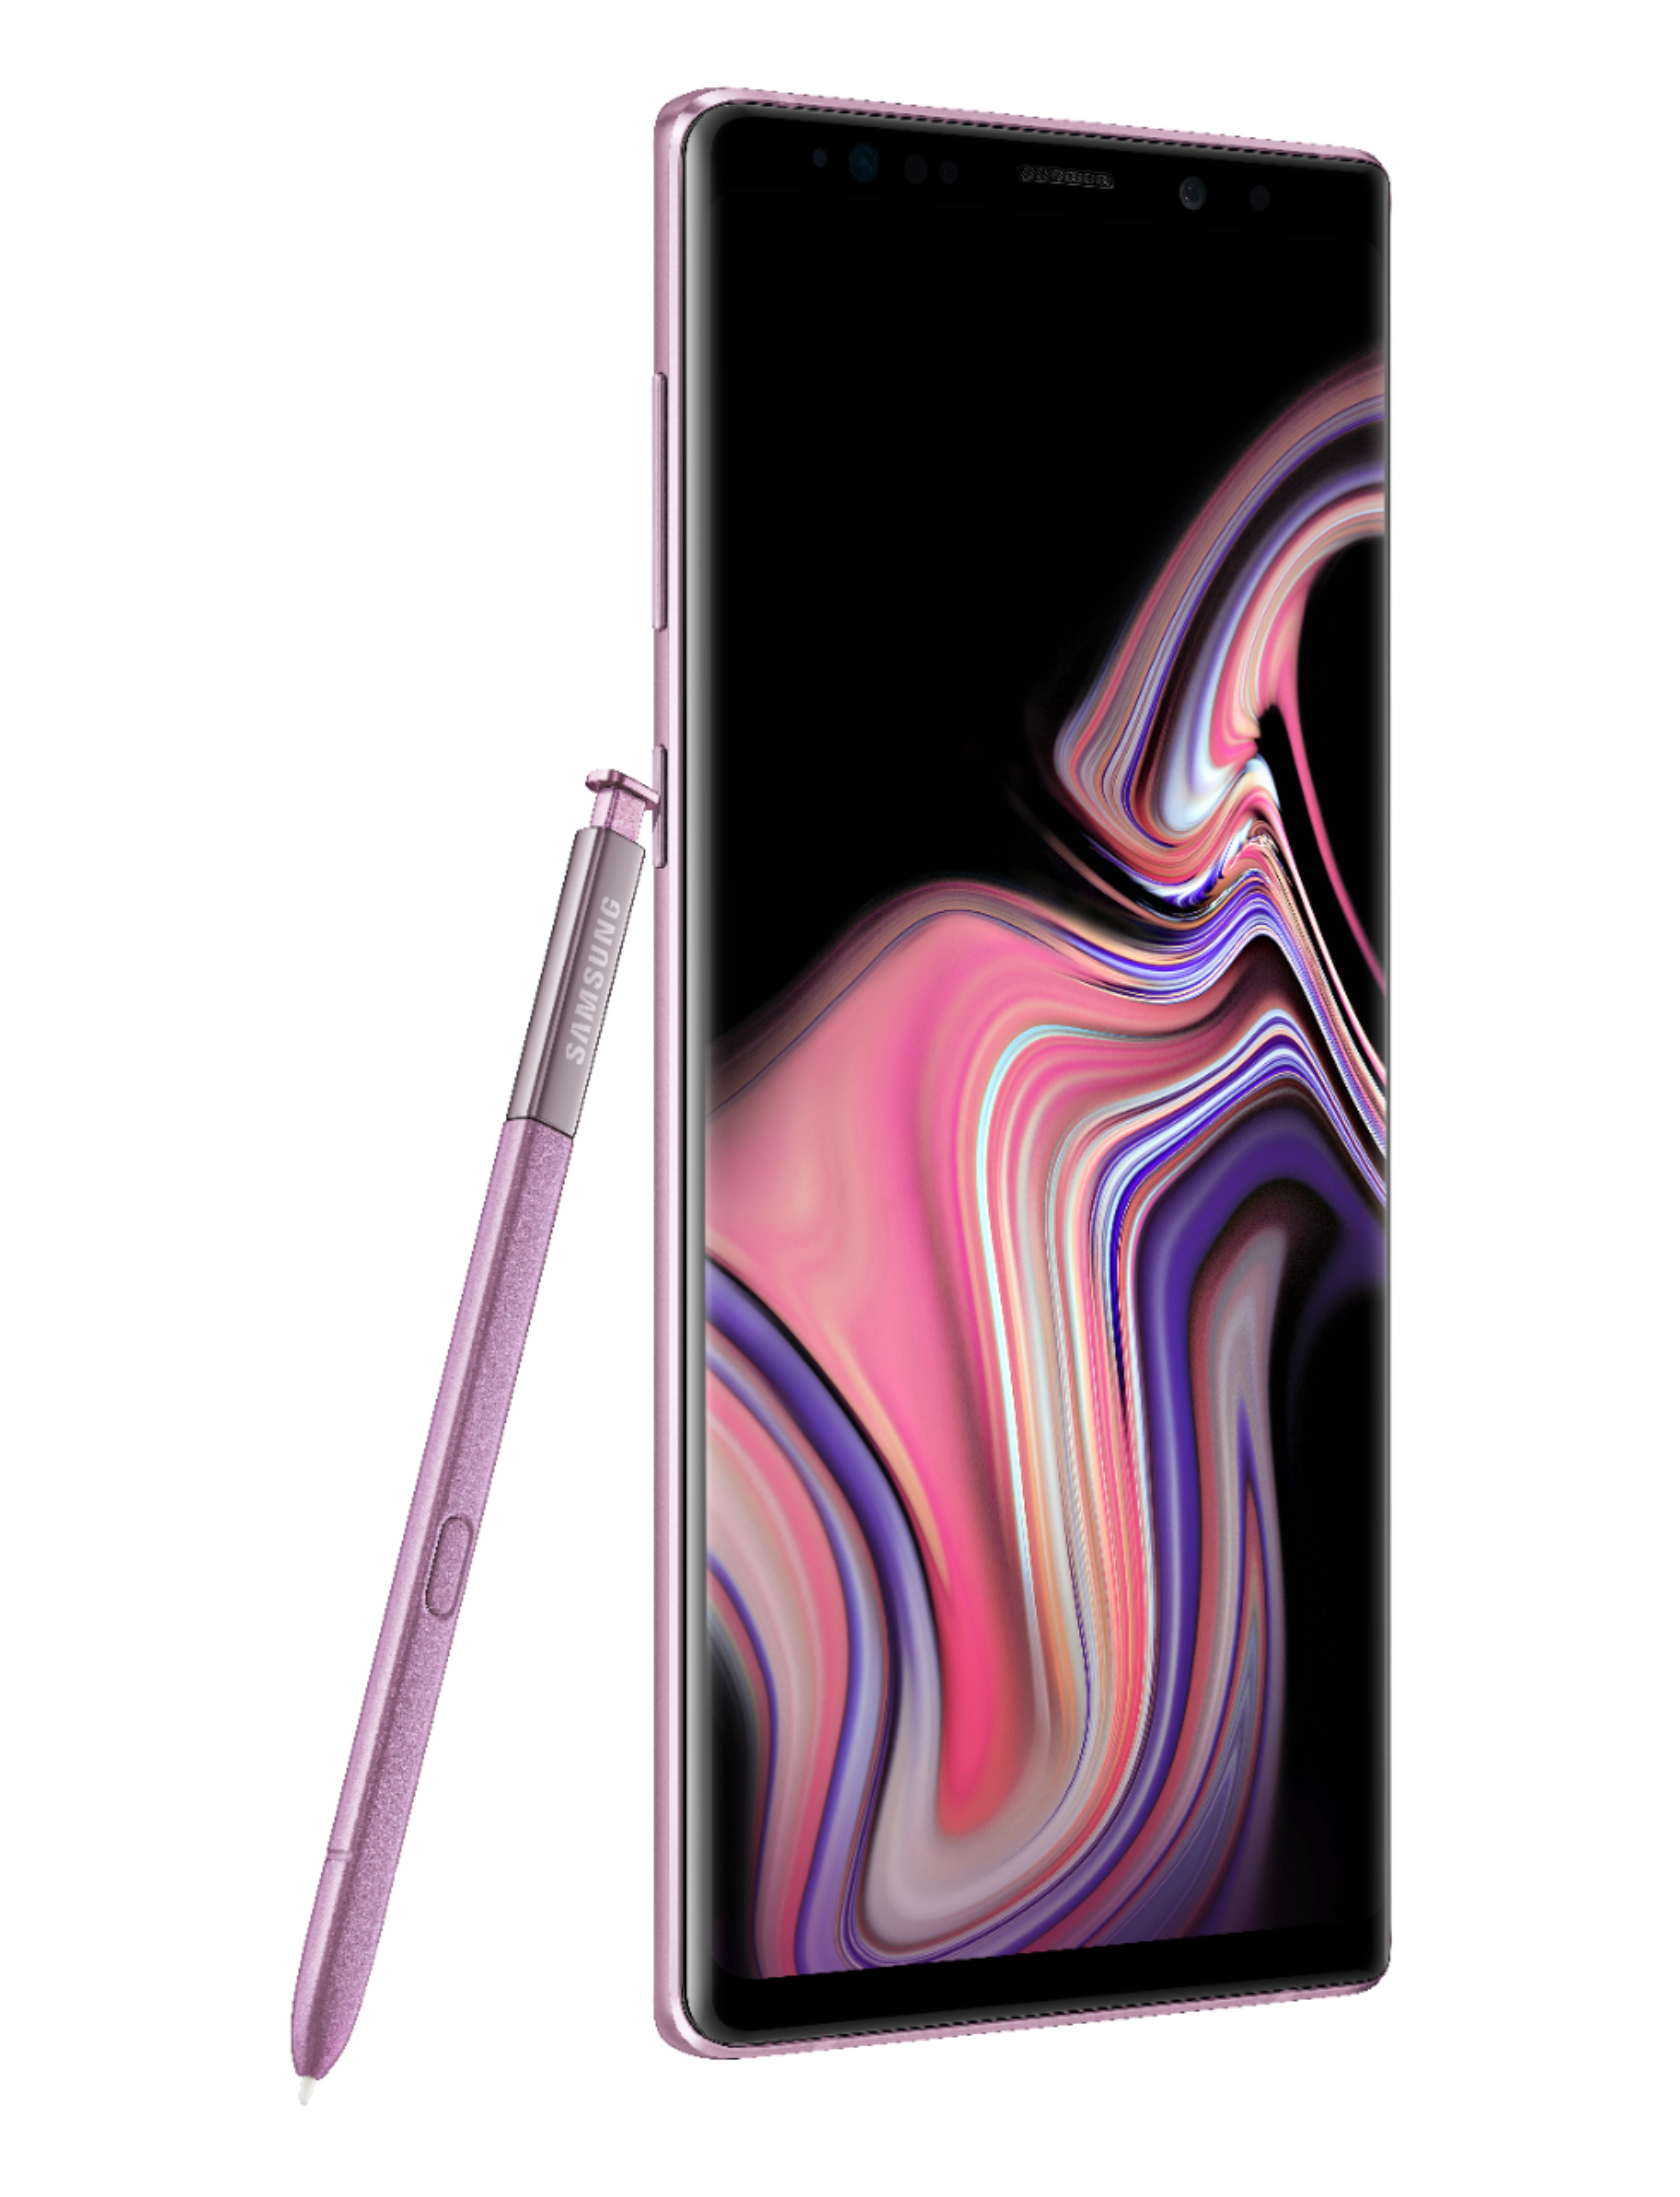 Angle View: Samsung - Geek Squad Certified Refurbished Galaxy Note9 128GB - Lavender Purple (Verizon)